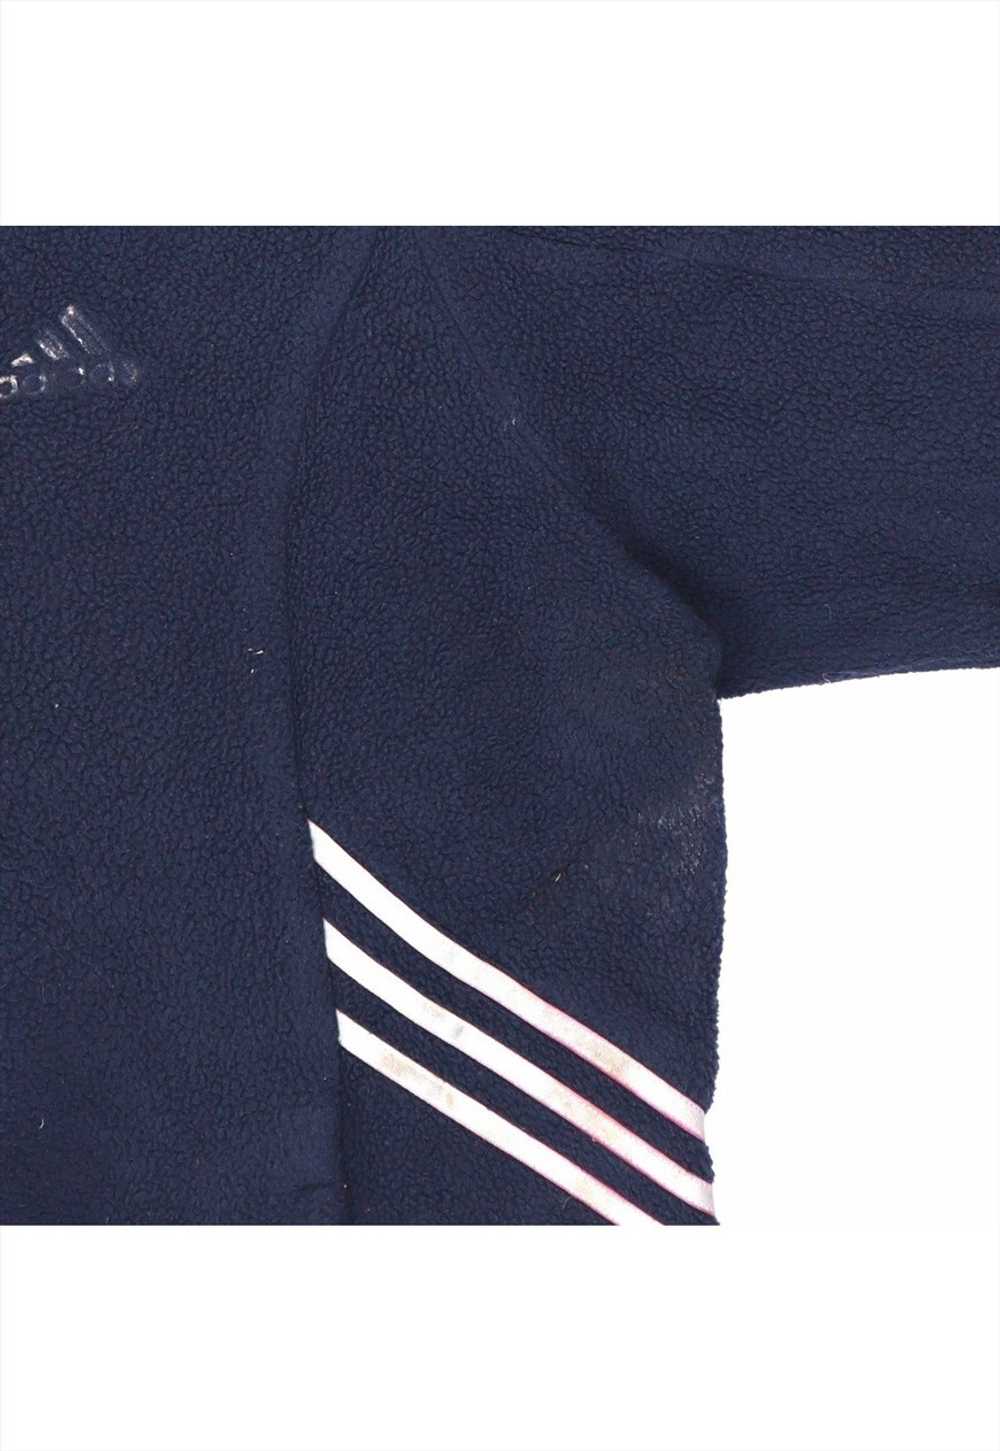 Vintage 90's Adidas Fleece Spellout Quarter Zip - image 4